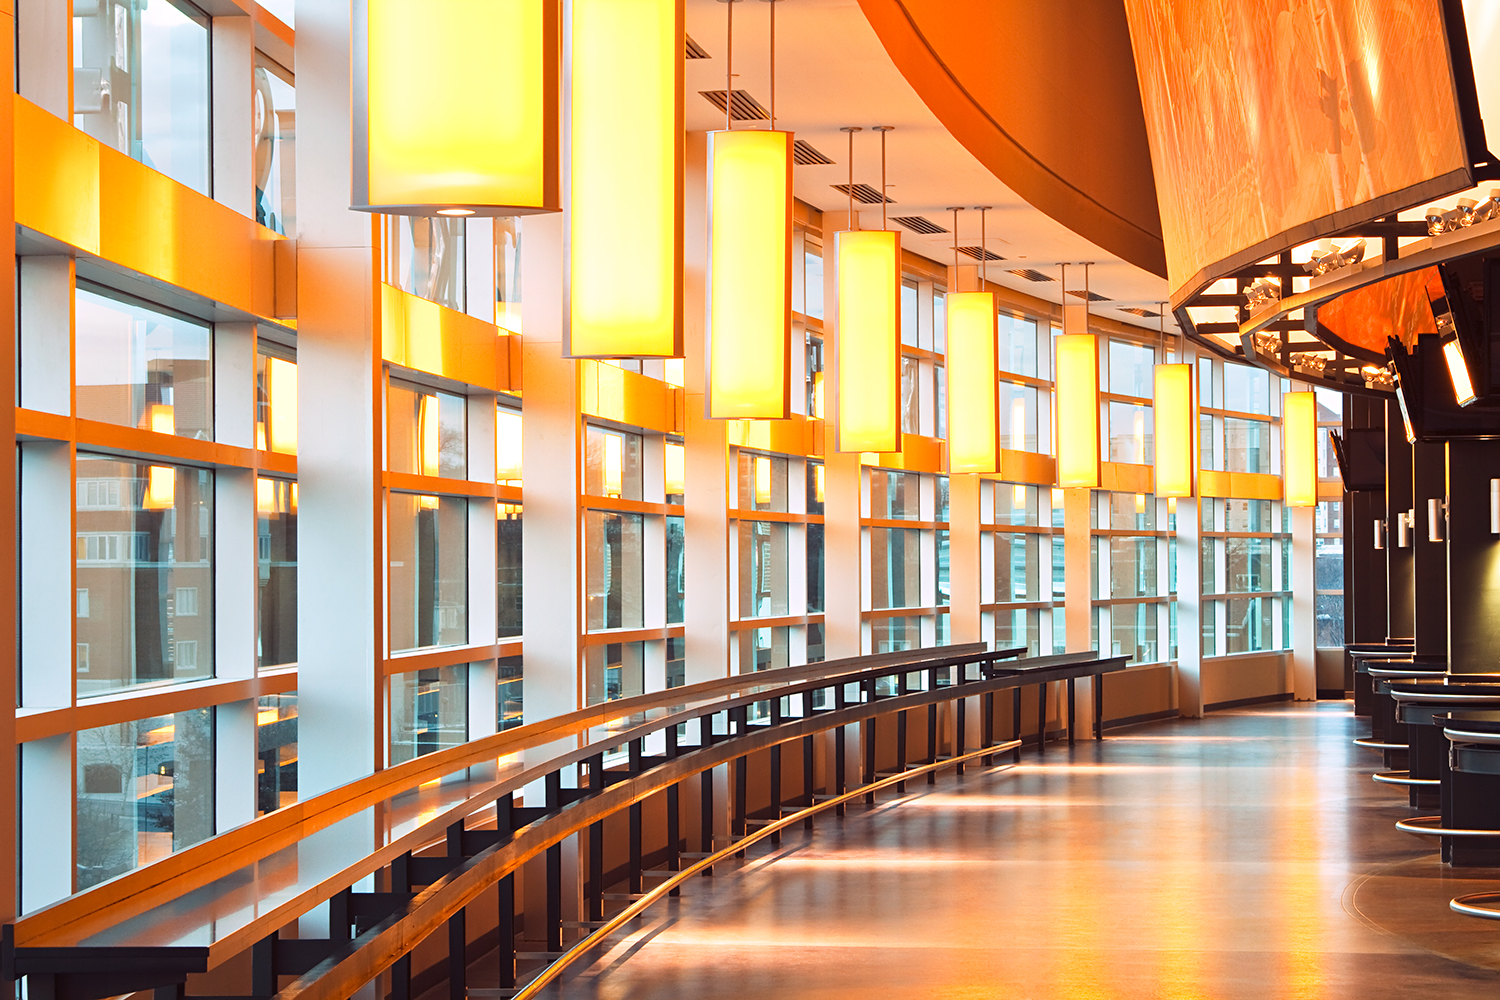 Air Foil education lighting fixtures hung along a stadium window in the university's unique orange color.